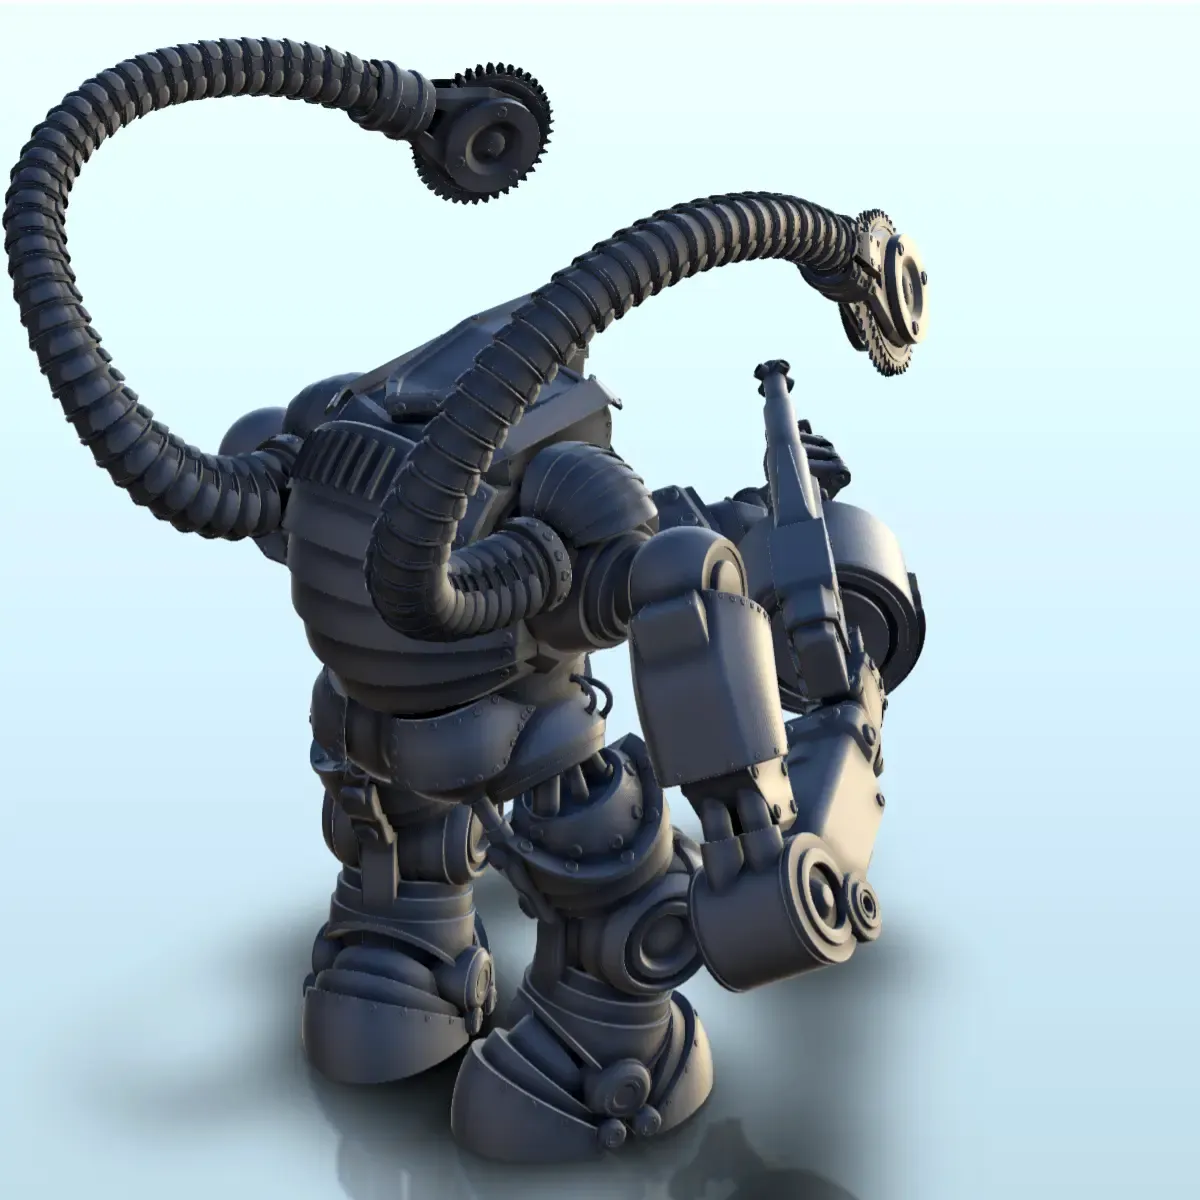 Phiterin combat robot (28) - sci-fi science fiction future 4